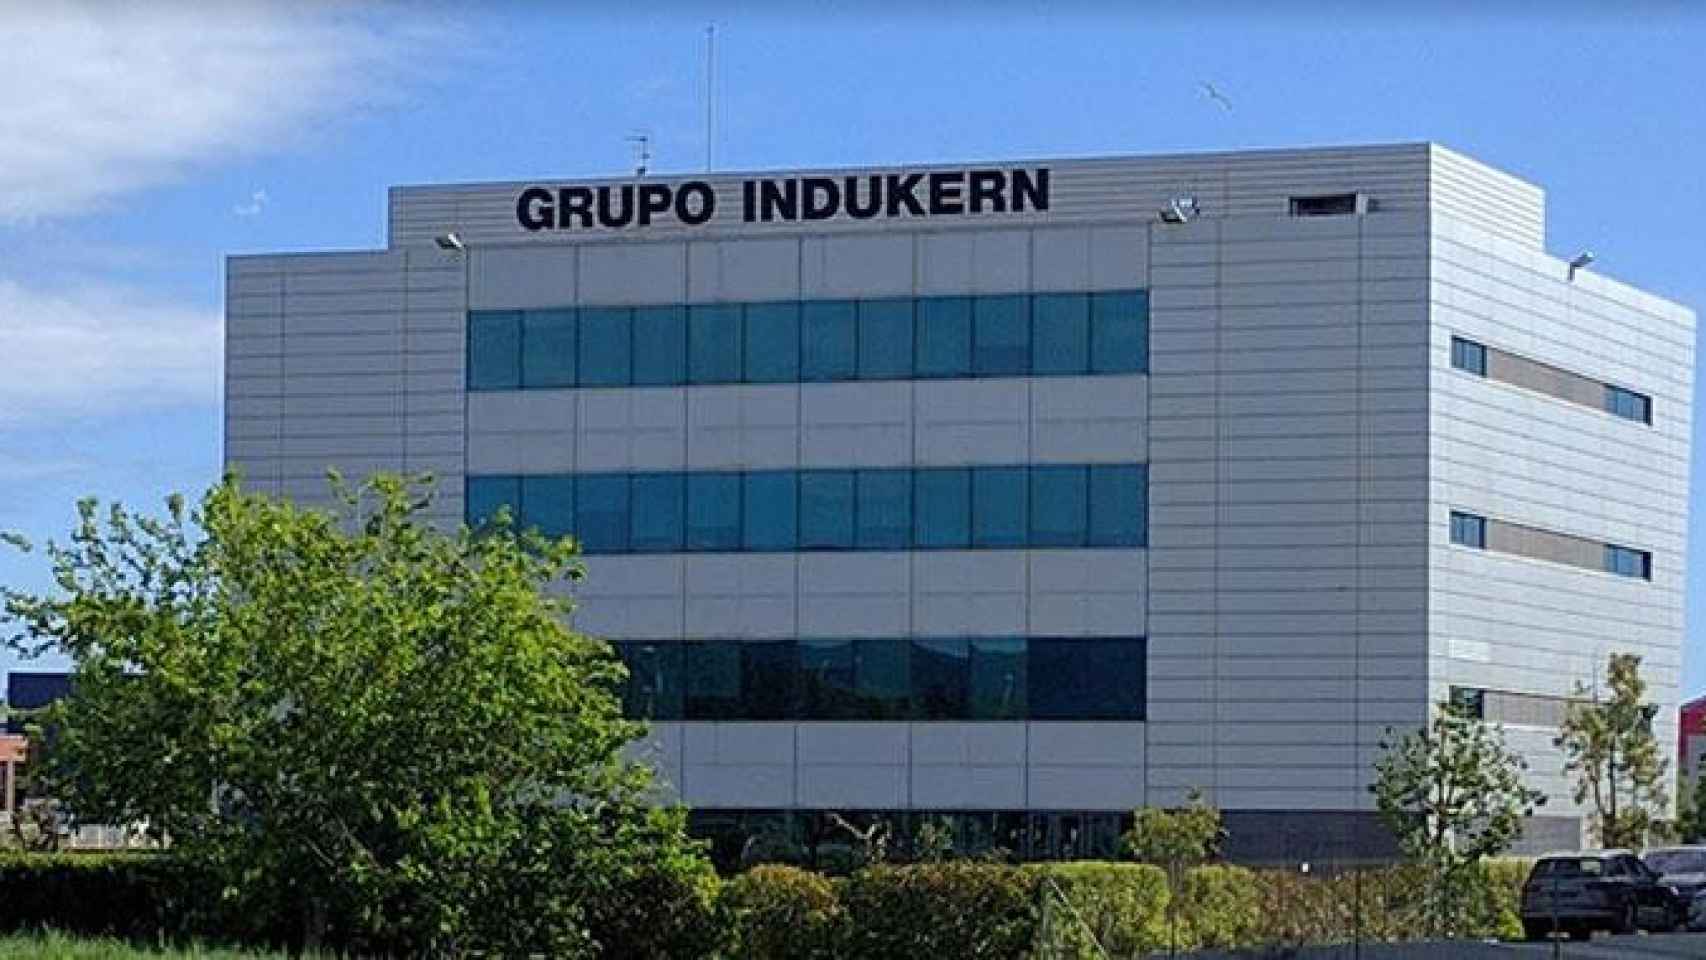 El exterior de las oficinas centrales de Indukern en El Prat de Llobregat / CG